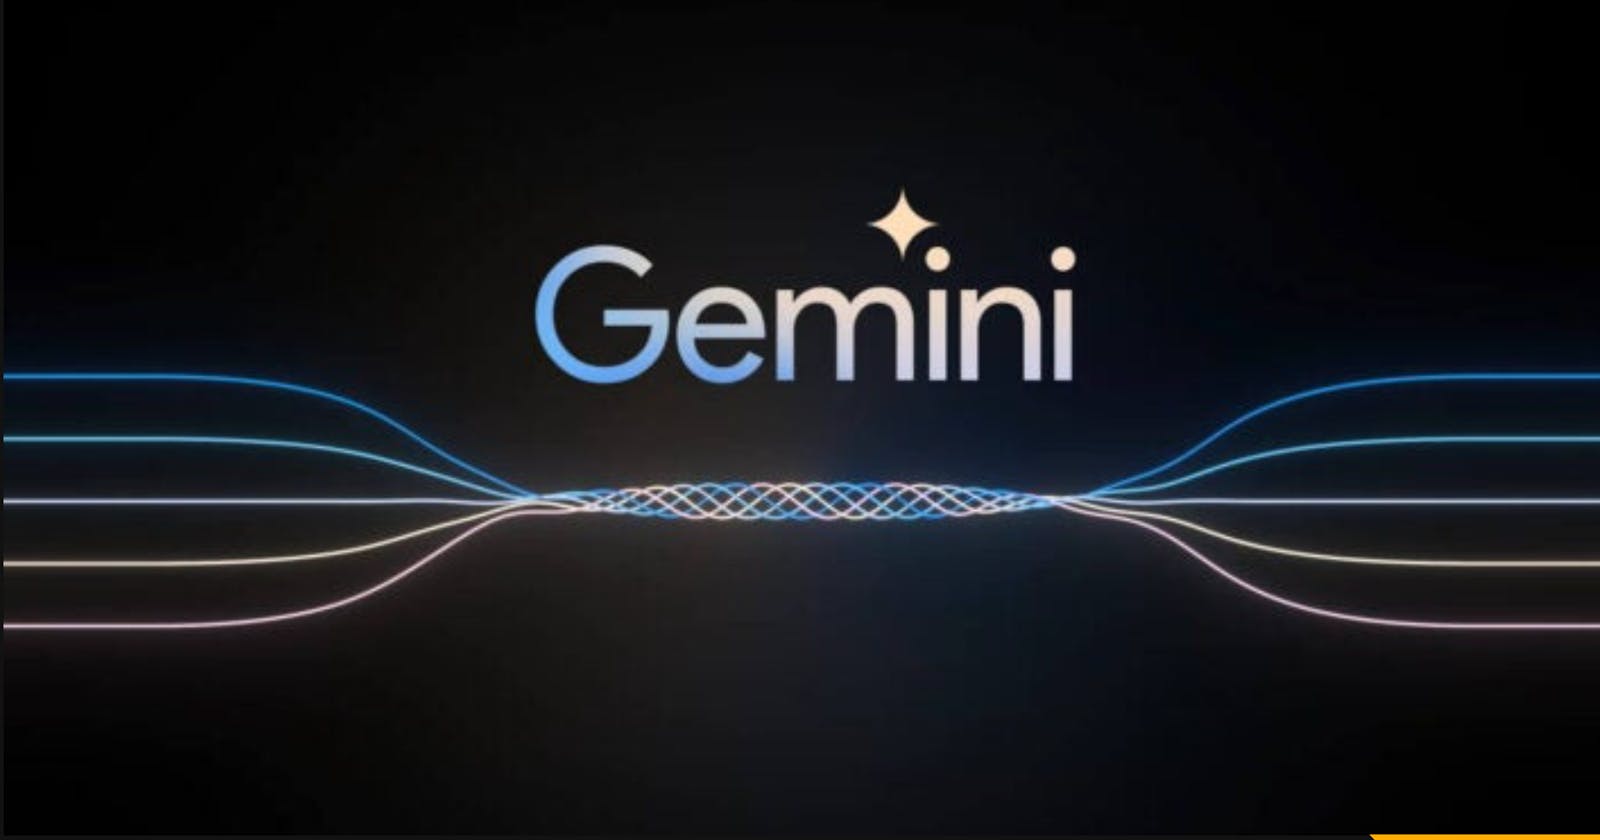 Gemini's groundbreaking features